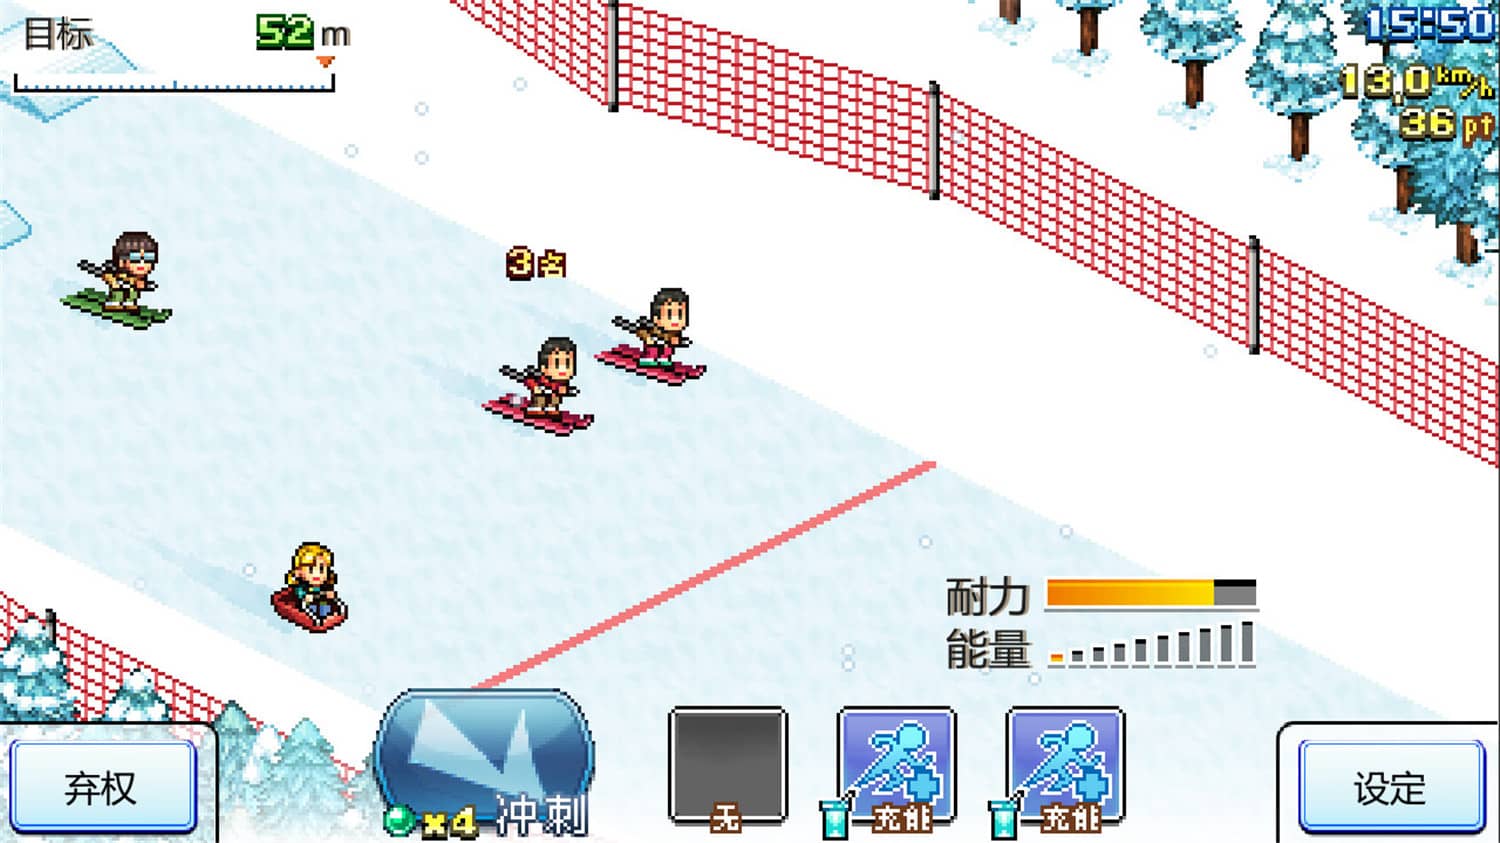 闪耀滑雪场物语/Shiny Ski Resort插图3